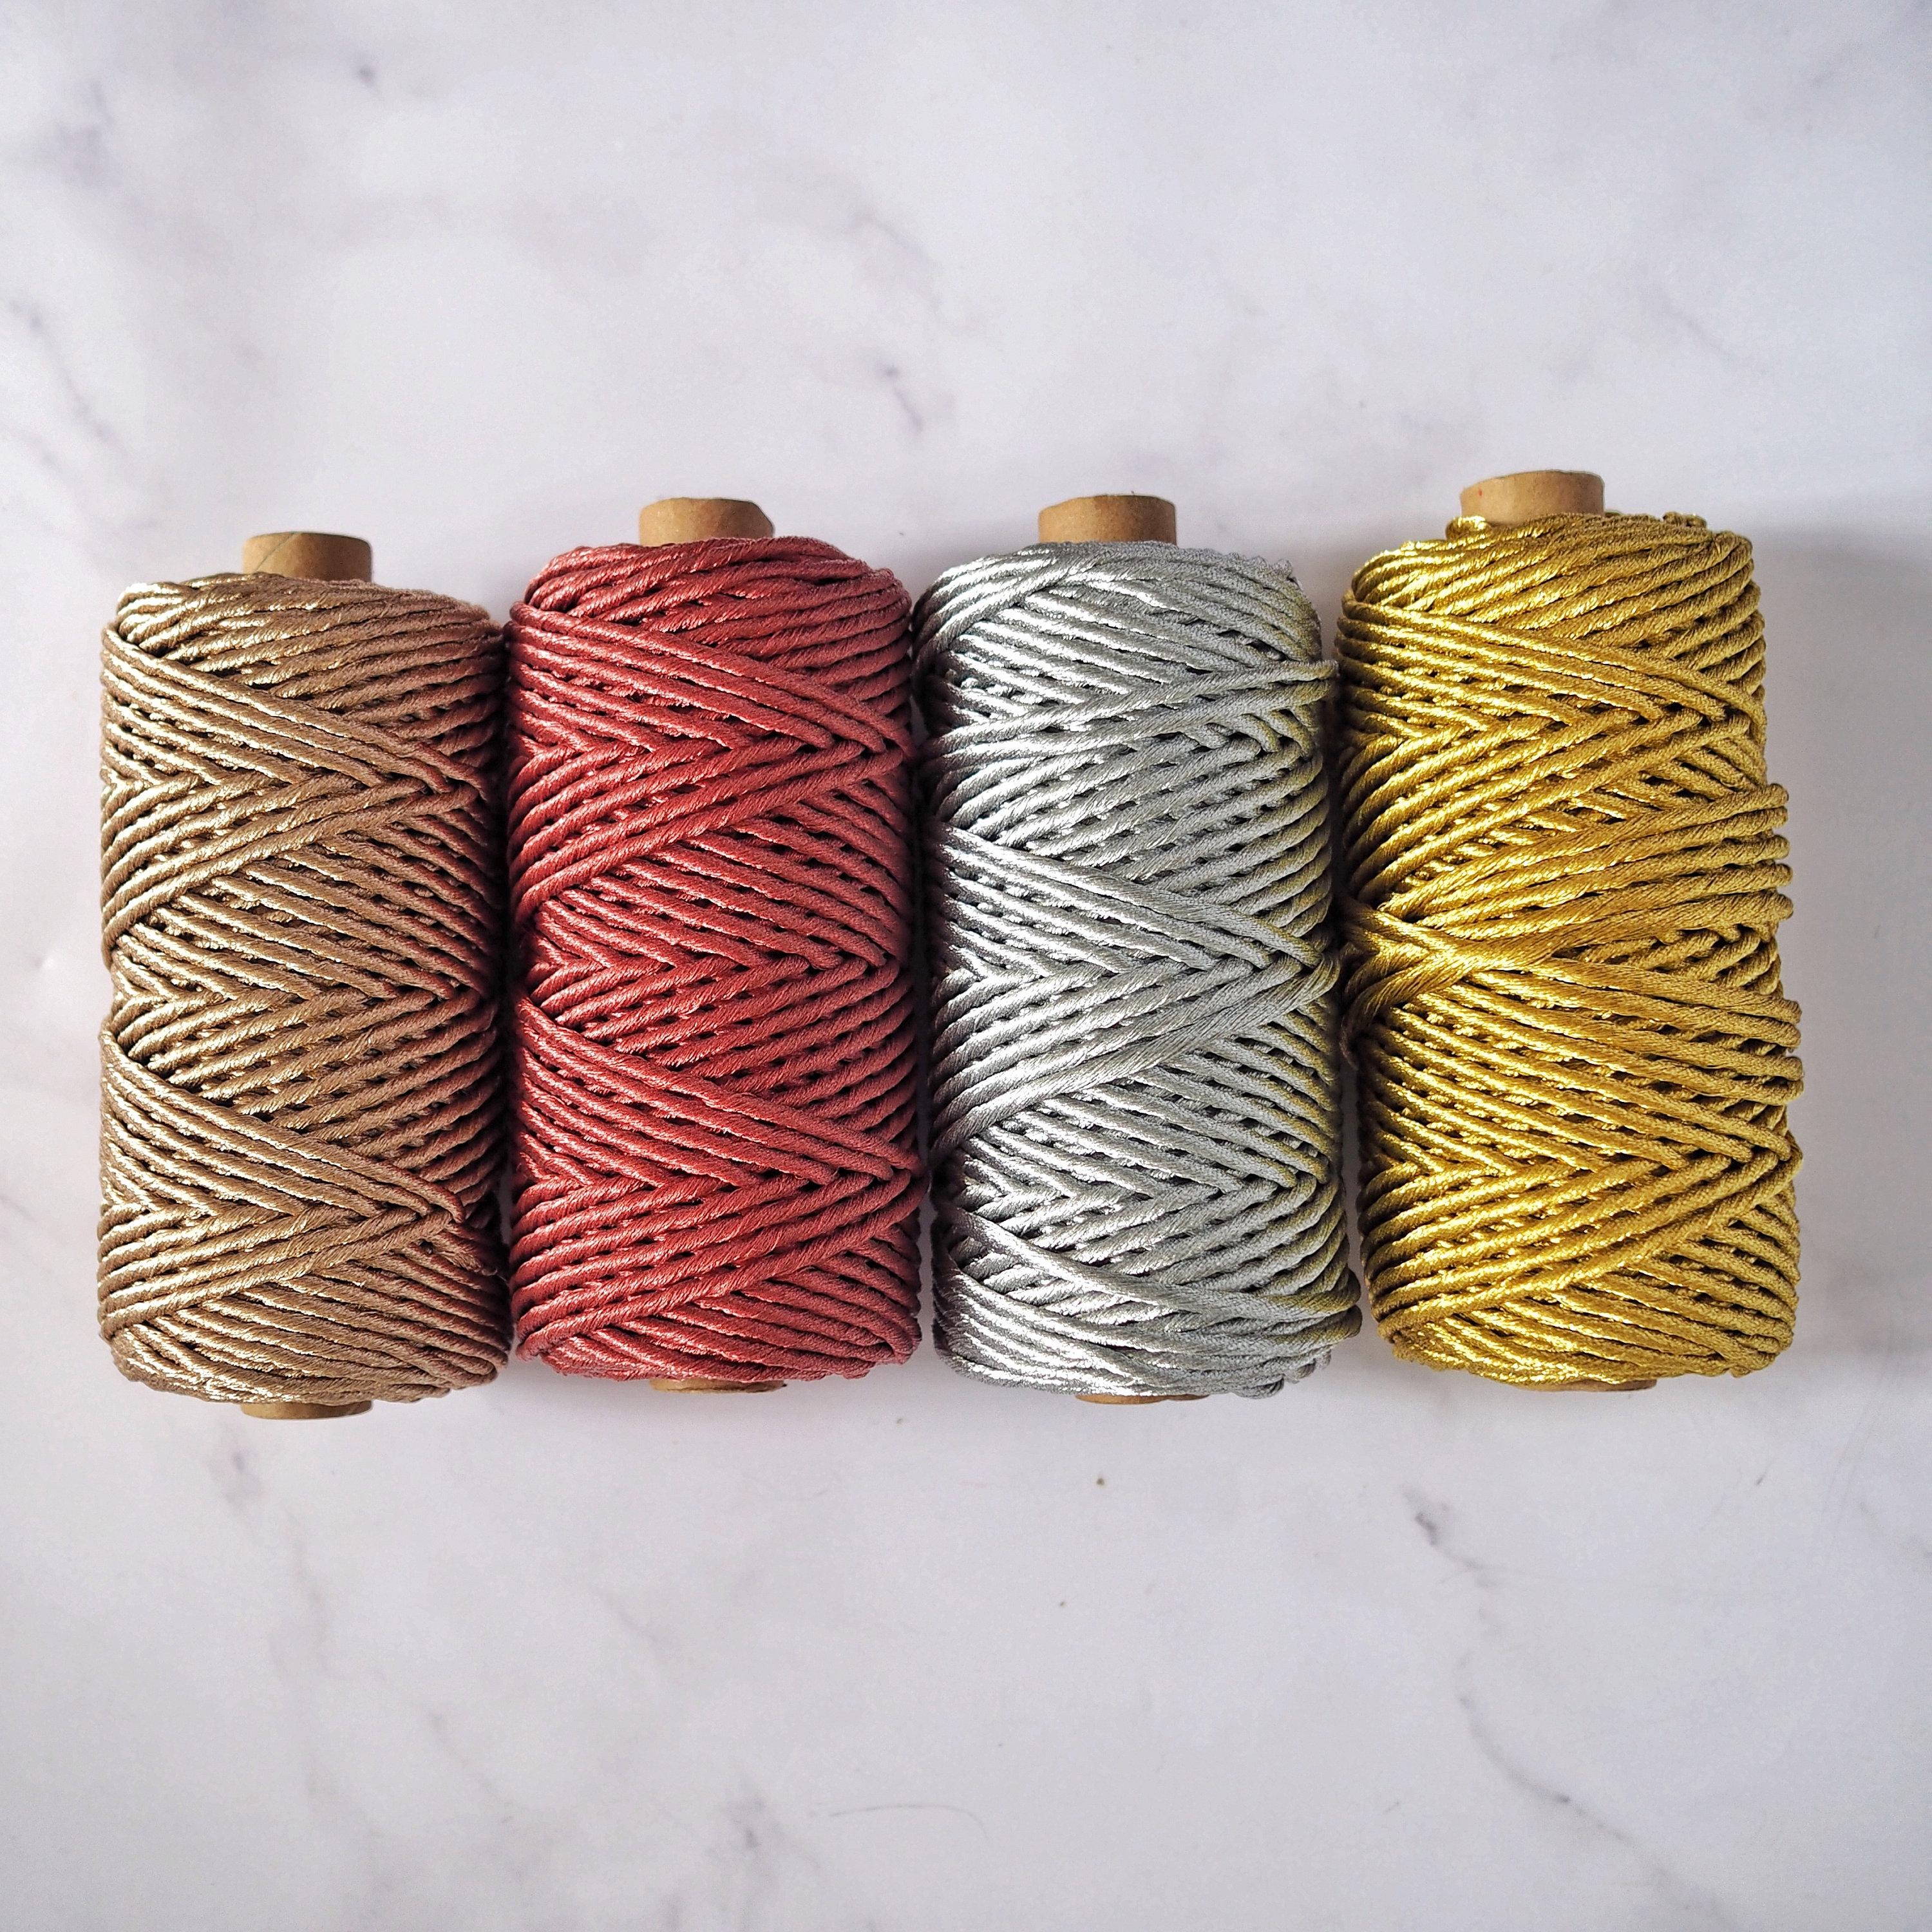 5mm Red Strong Rope Cord Round Soft Chunky Yarn Drawstring Tying Crochet  Bag Handles Corda Garden Travel UK 